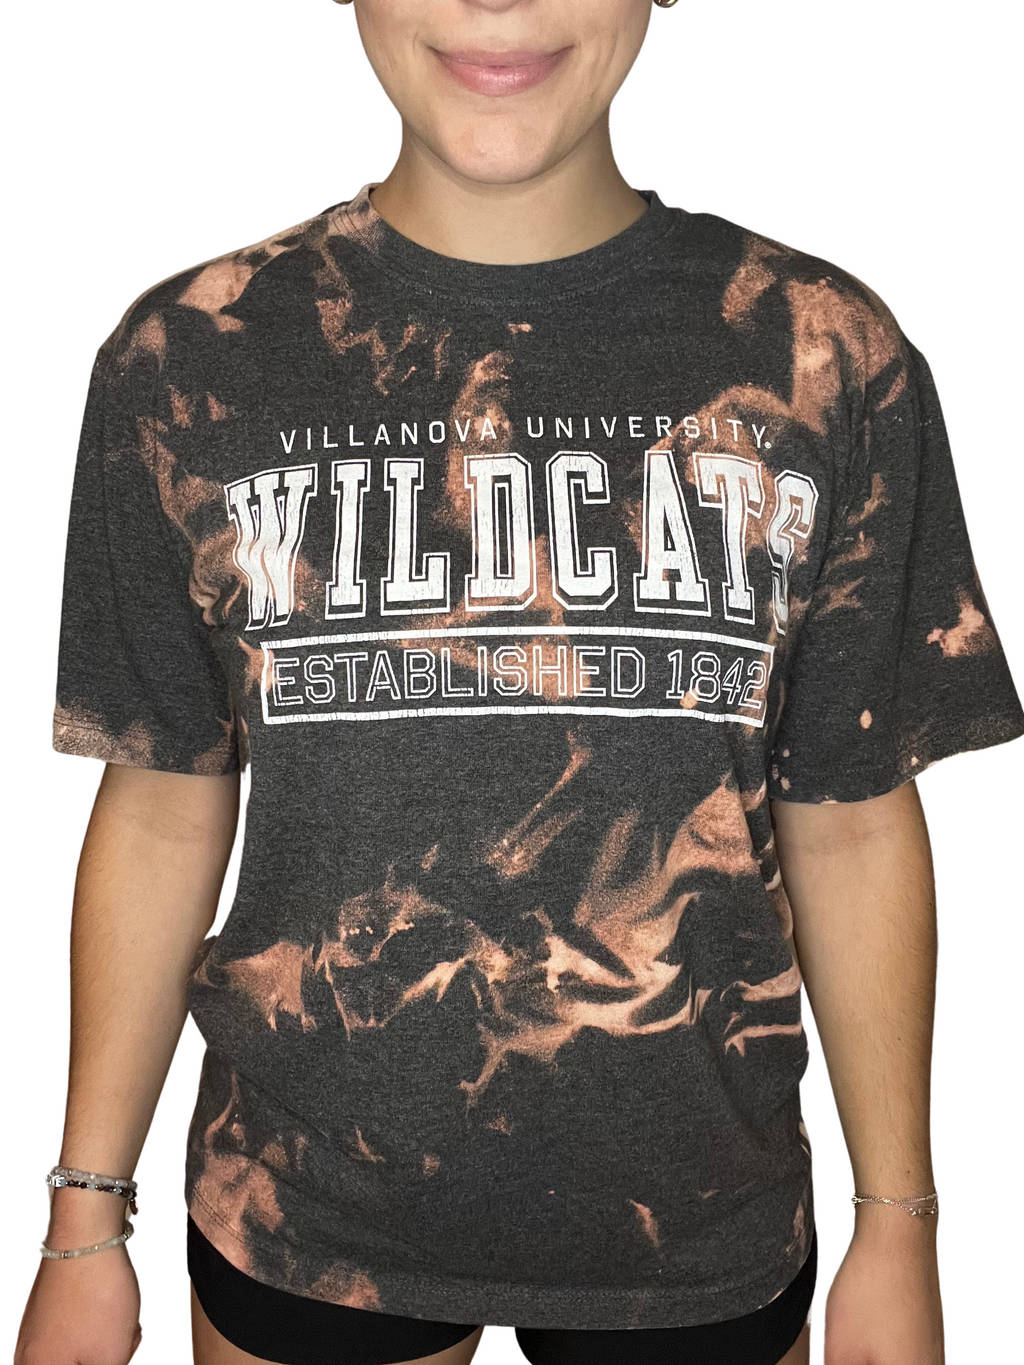 Villanova University Bleached Shirt